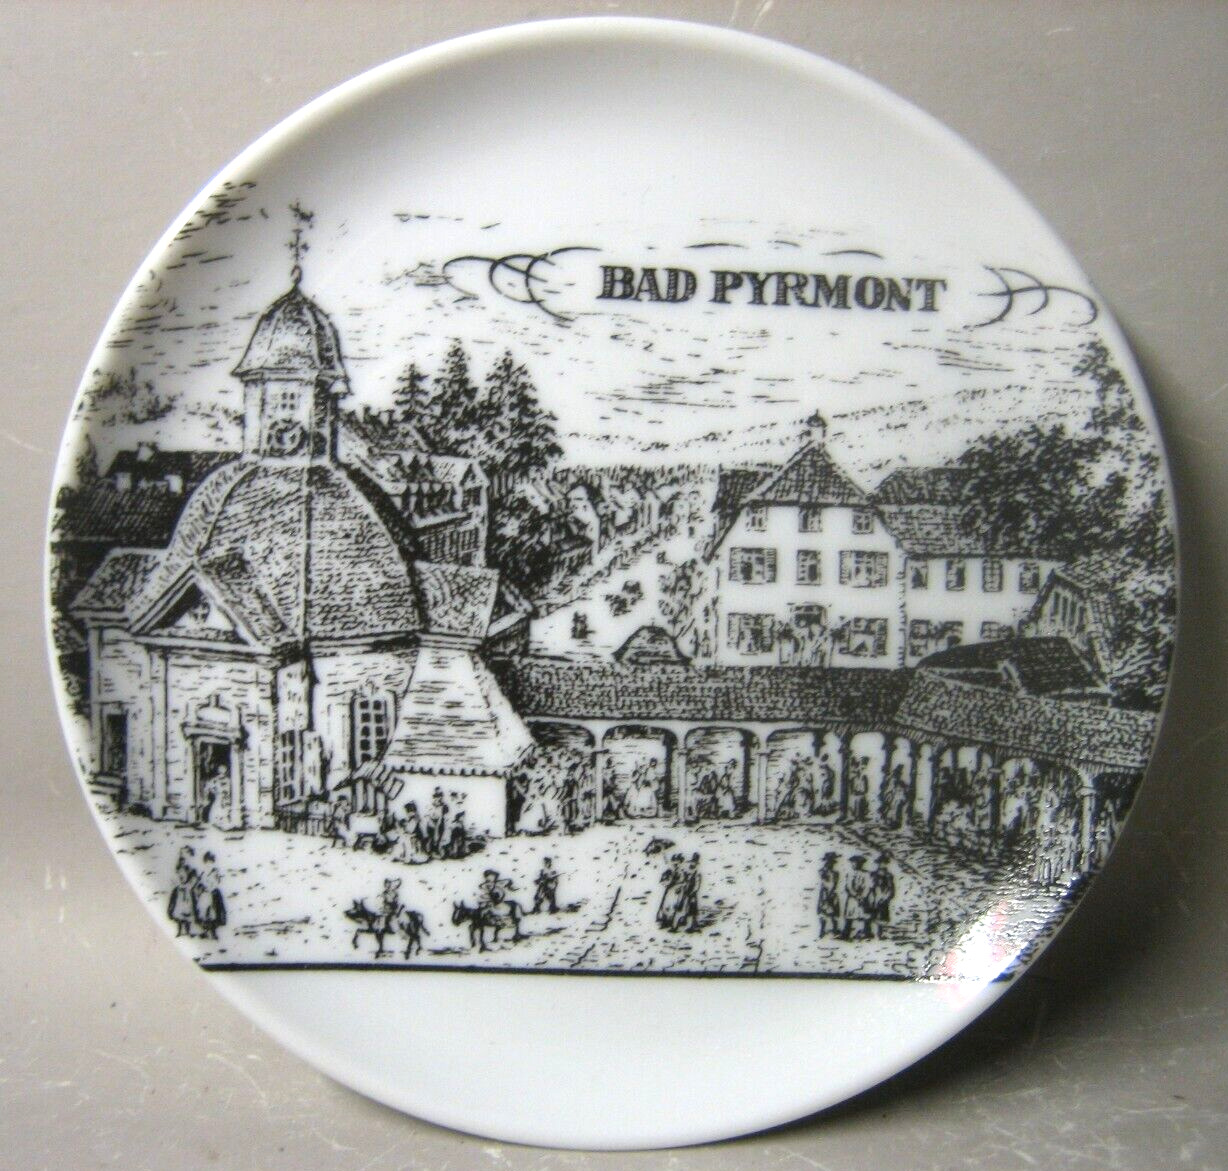 BAD PYRMONT ALTENKUNSTADT GERMANY decorative plate / souvenir